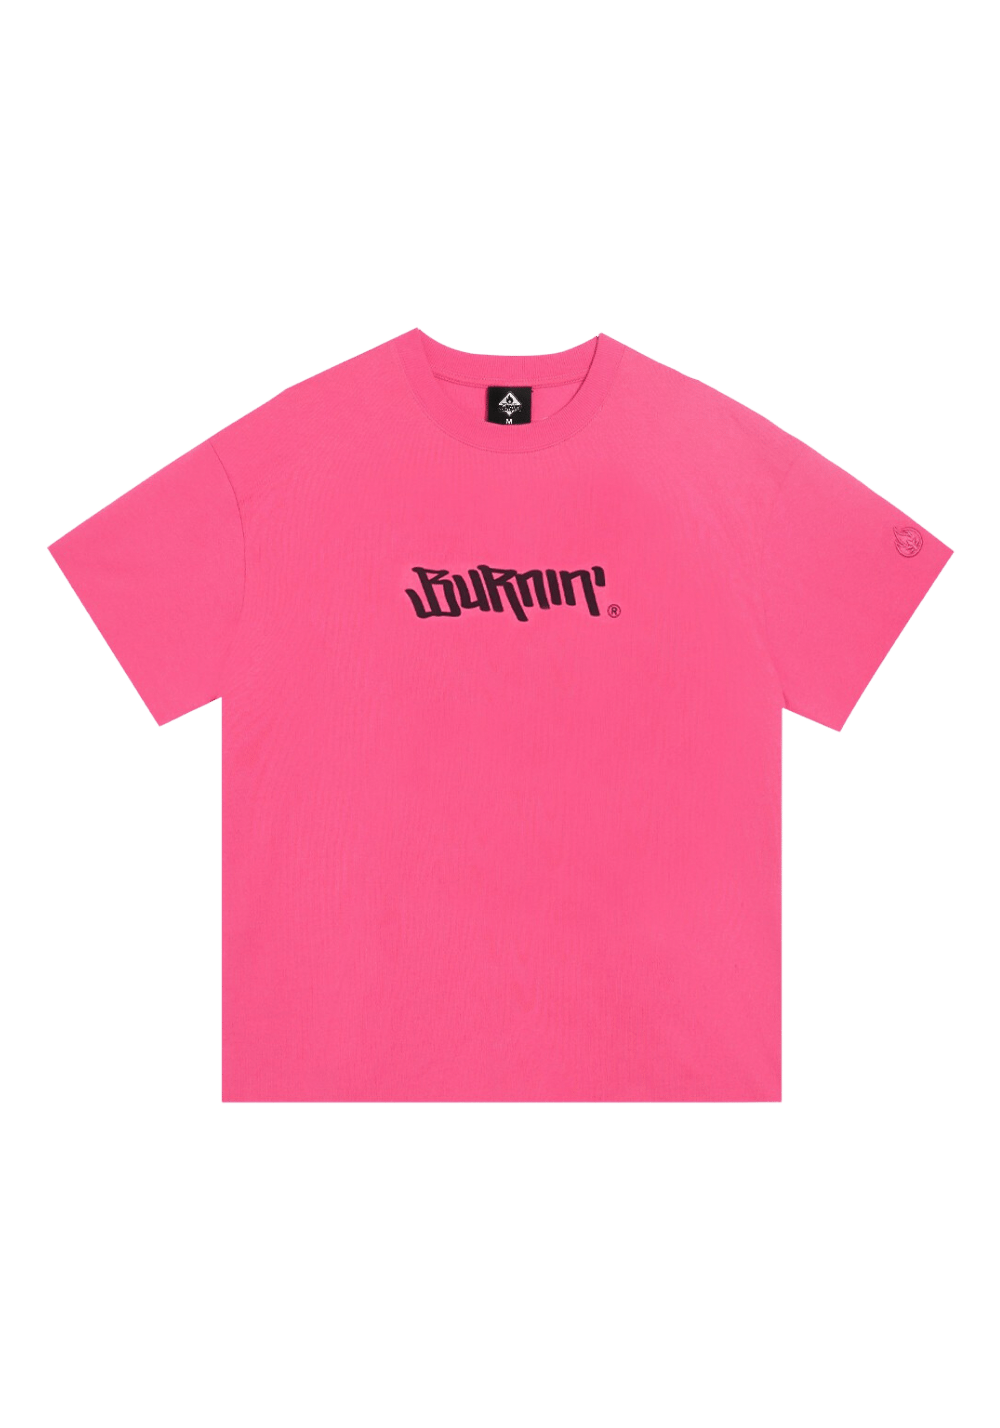 Horizontal Logo Oversized T-Shirt-Pink - PSYLOS 1, Horizontal Logo Oversized T-Shirt-Pink, T-Shirt, Burnin, PSYLOS 1